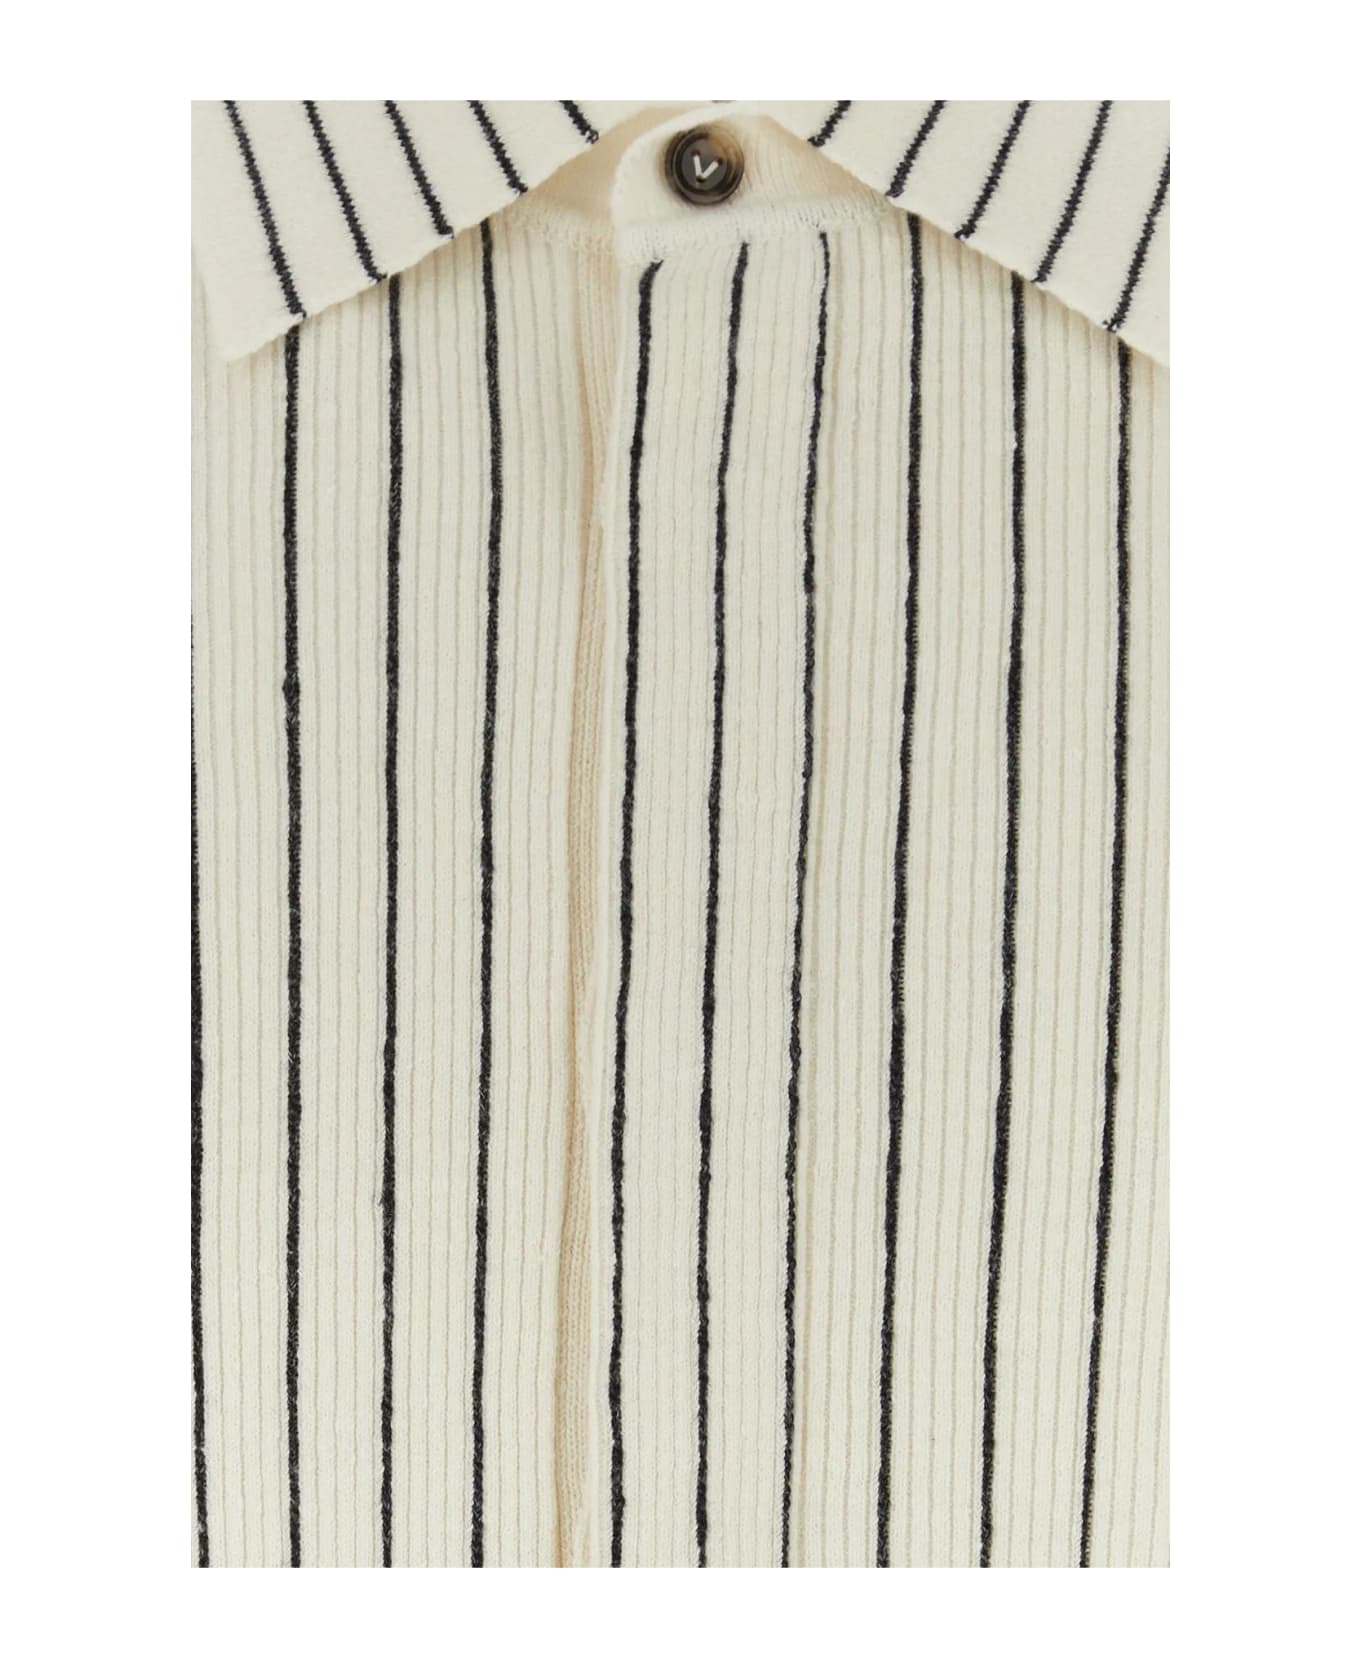 Bottega Veneta Embroidered Stretch Linen Blend Shirt - Chalk/grey melange